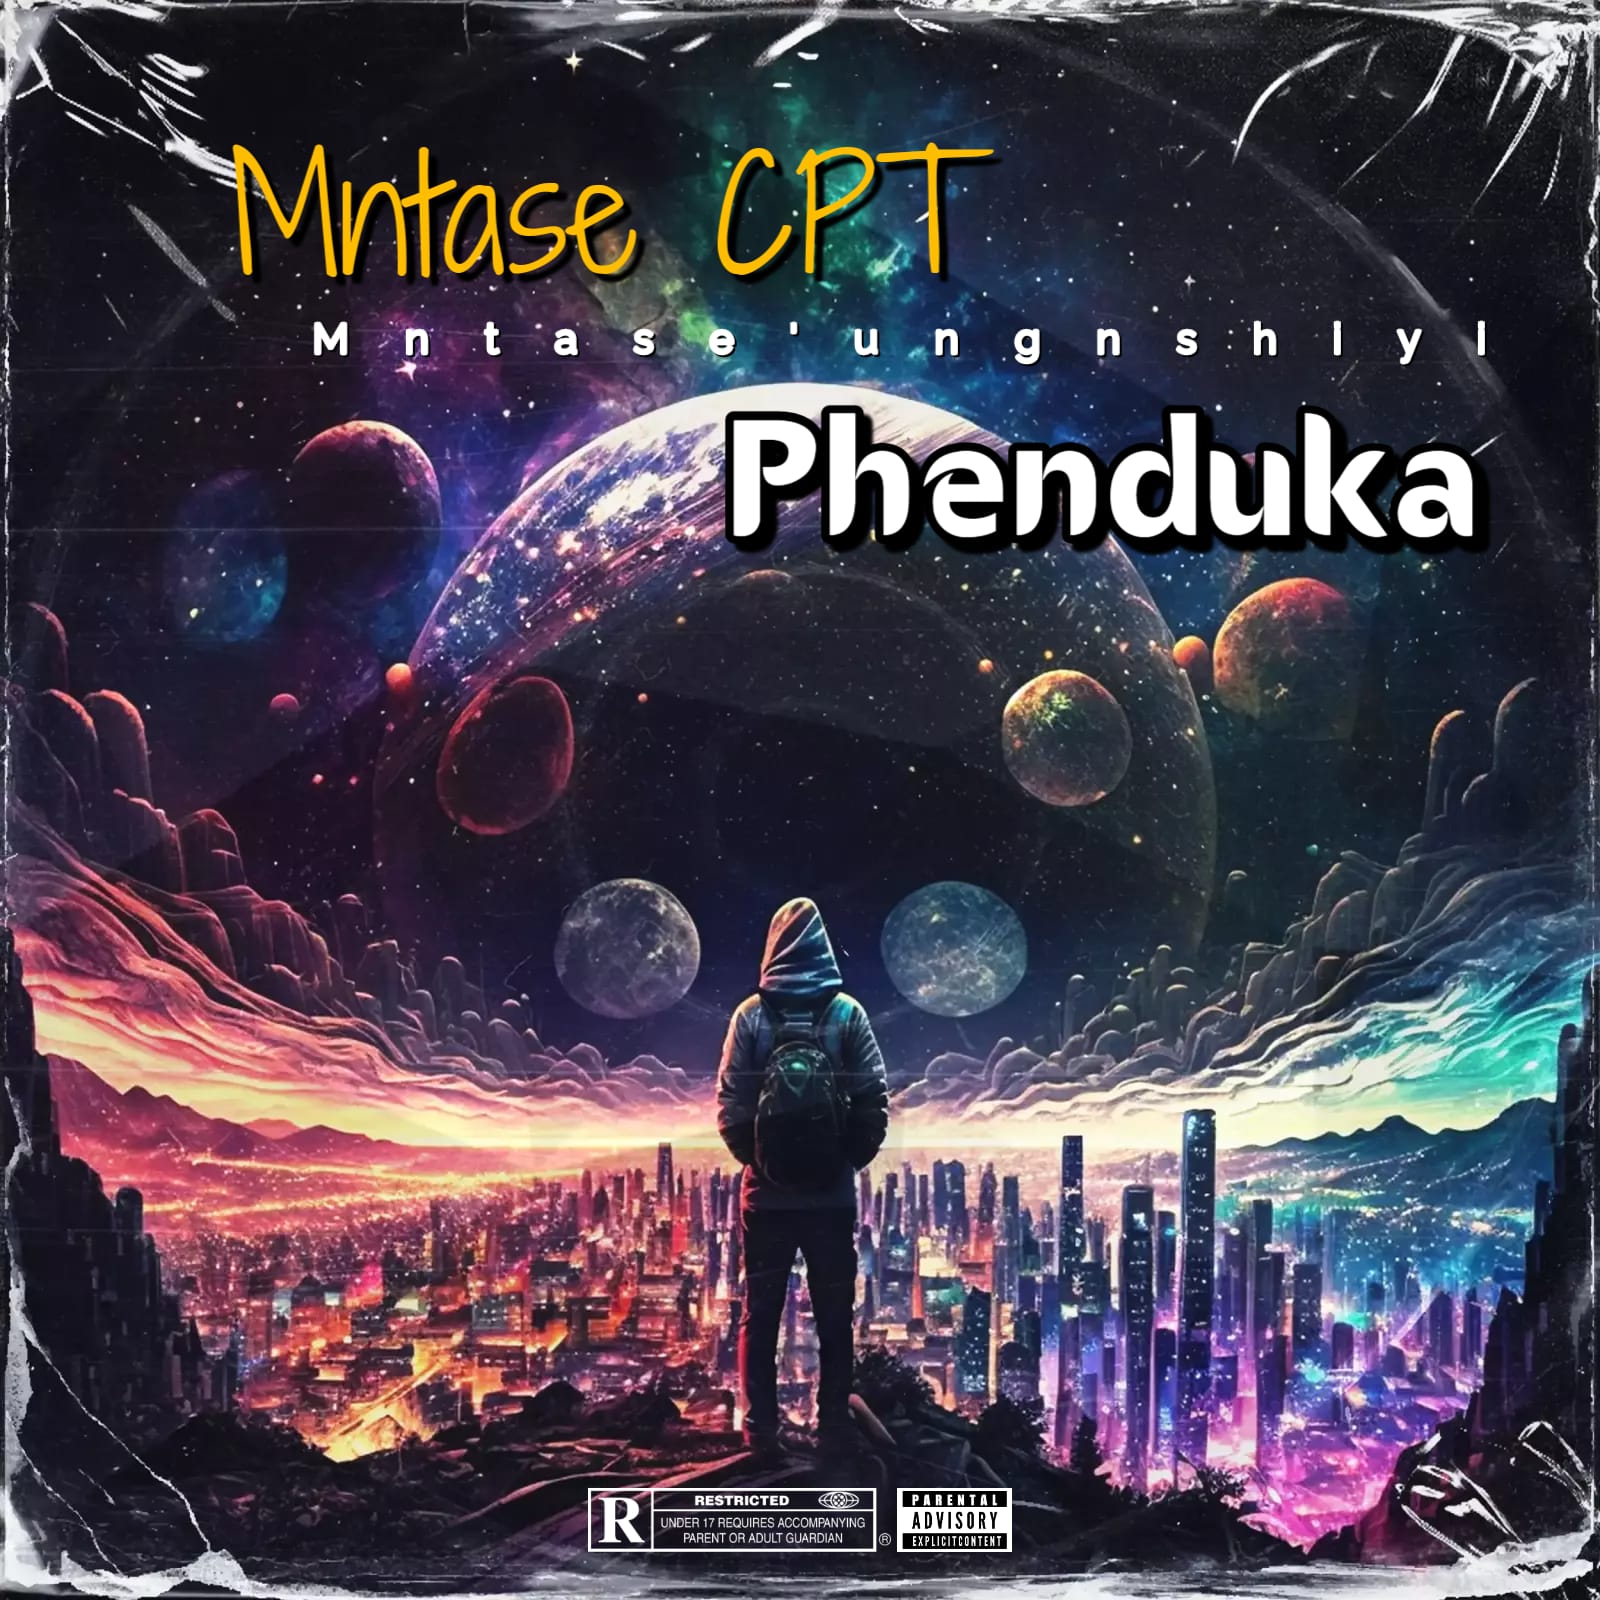 Phenduka - Mntase CPT